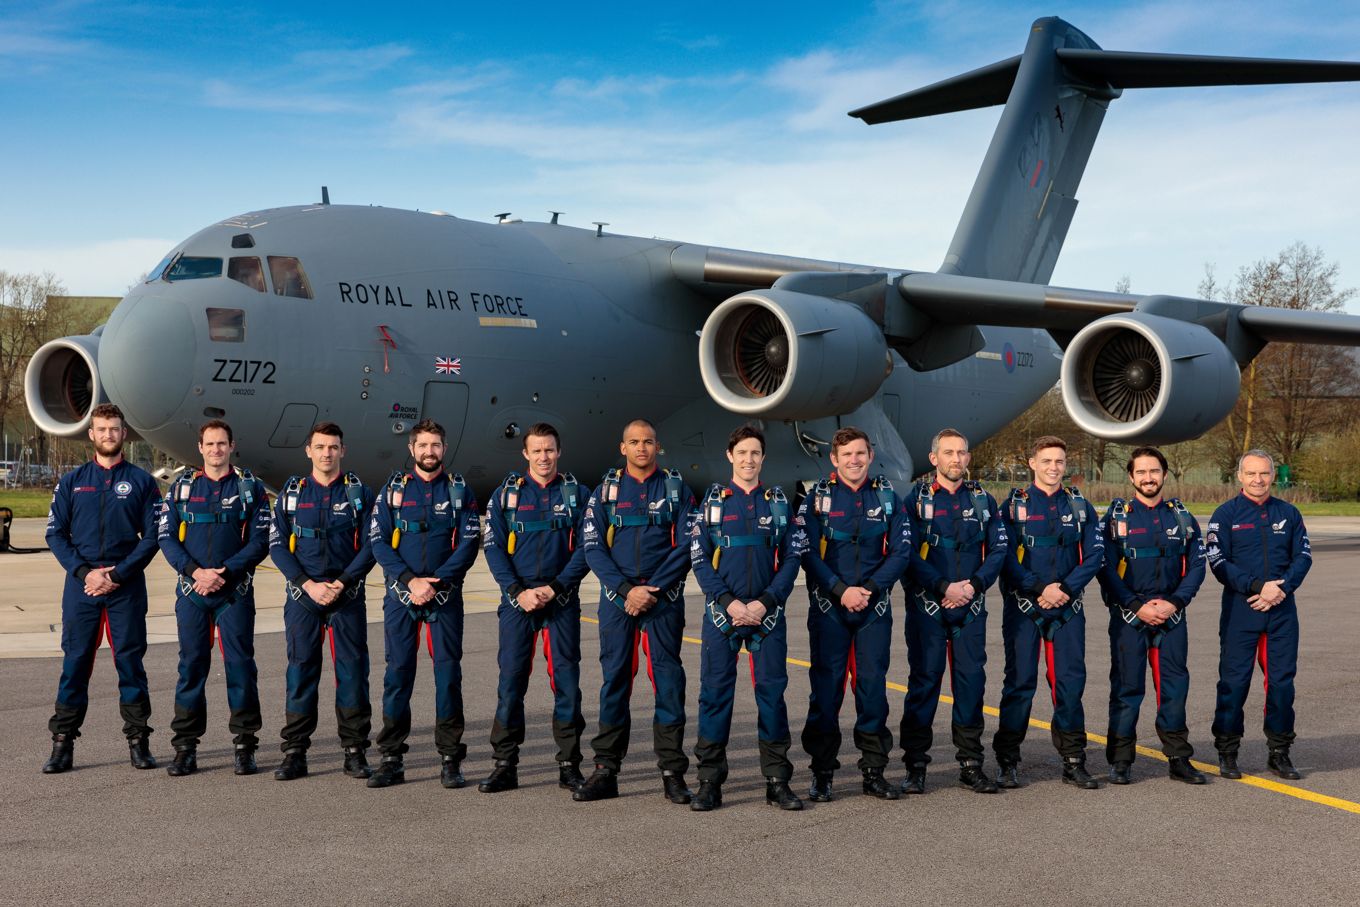 The Team Falcons Royal Air Force